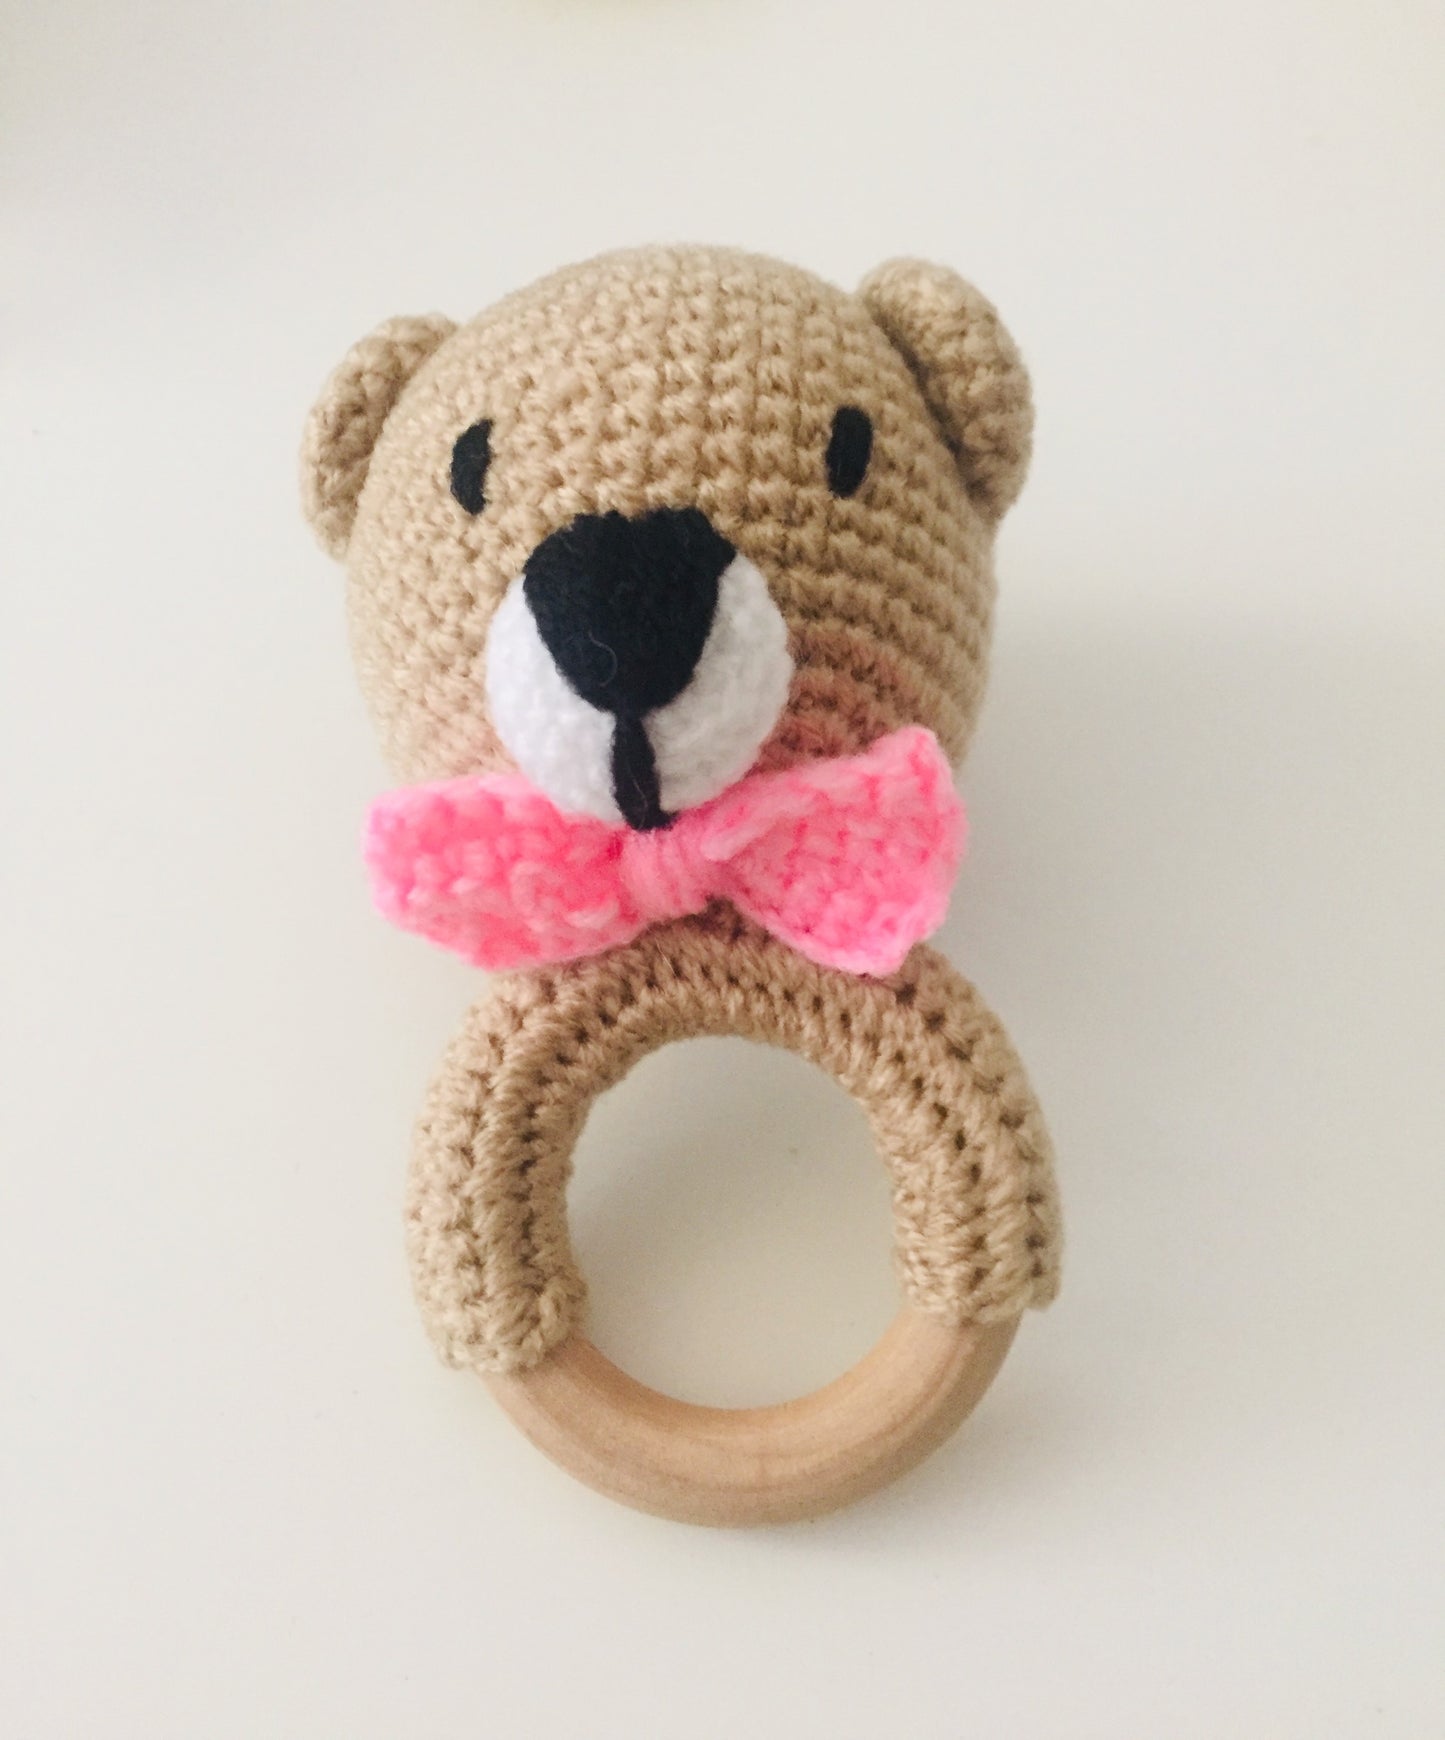 Handmade Crochet Teddy Baby Rattle with cute Bow